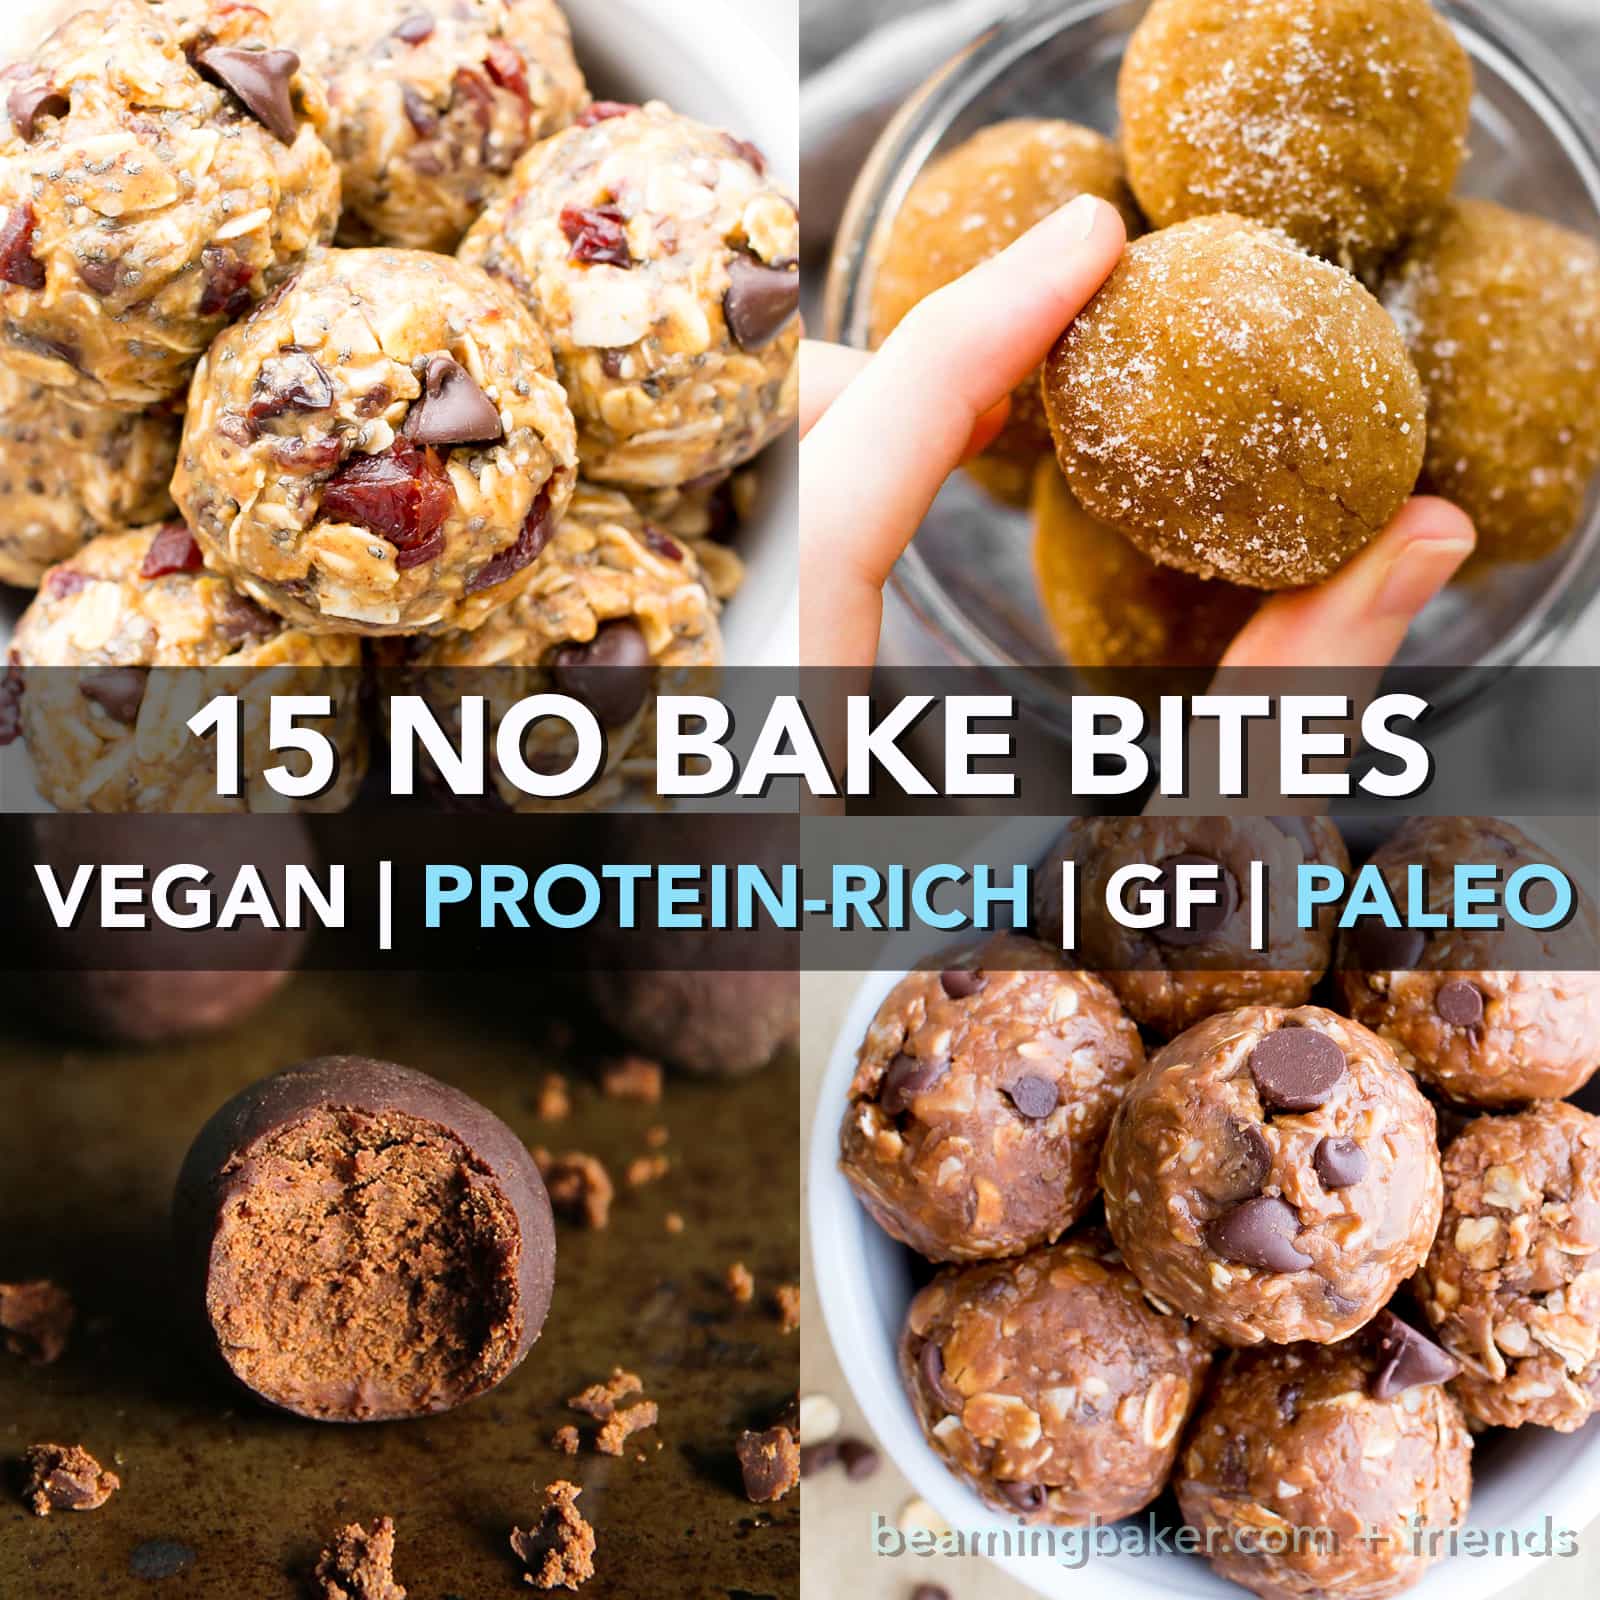 15 Healthy Protein-Packed No Bake Energy Bite Recipes (Gluten Free, Vegan, Paleo, Dairy-Free)